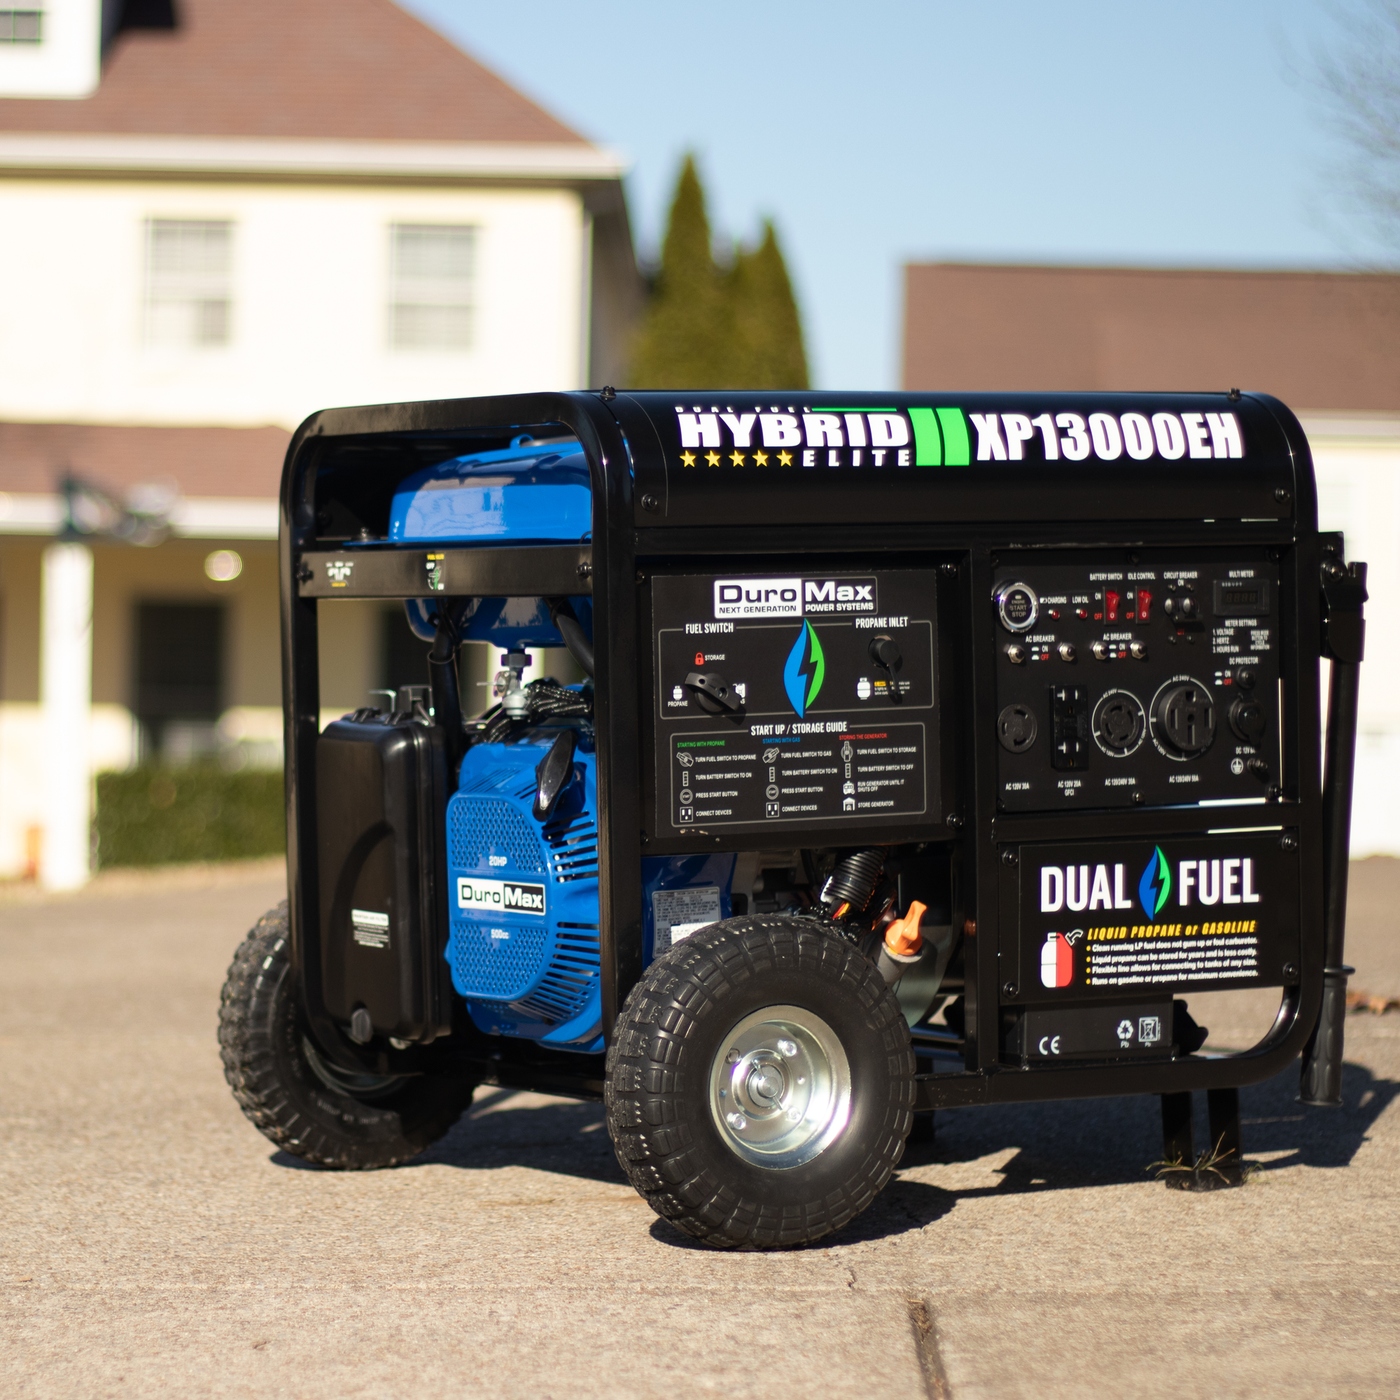 13,000 Watt Dual Fuel Portable Equipment Power – XP13000EH – Generator DuroMax